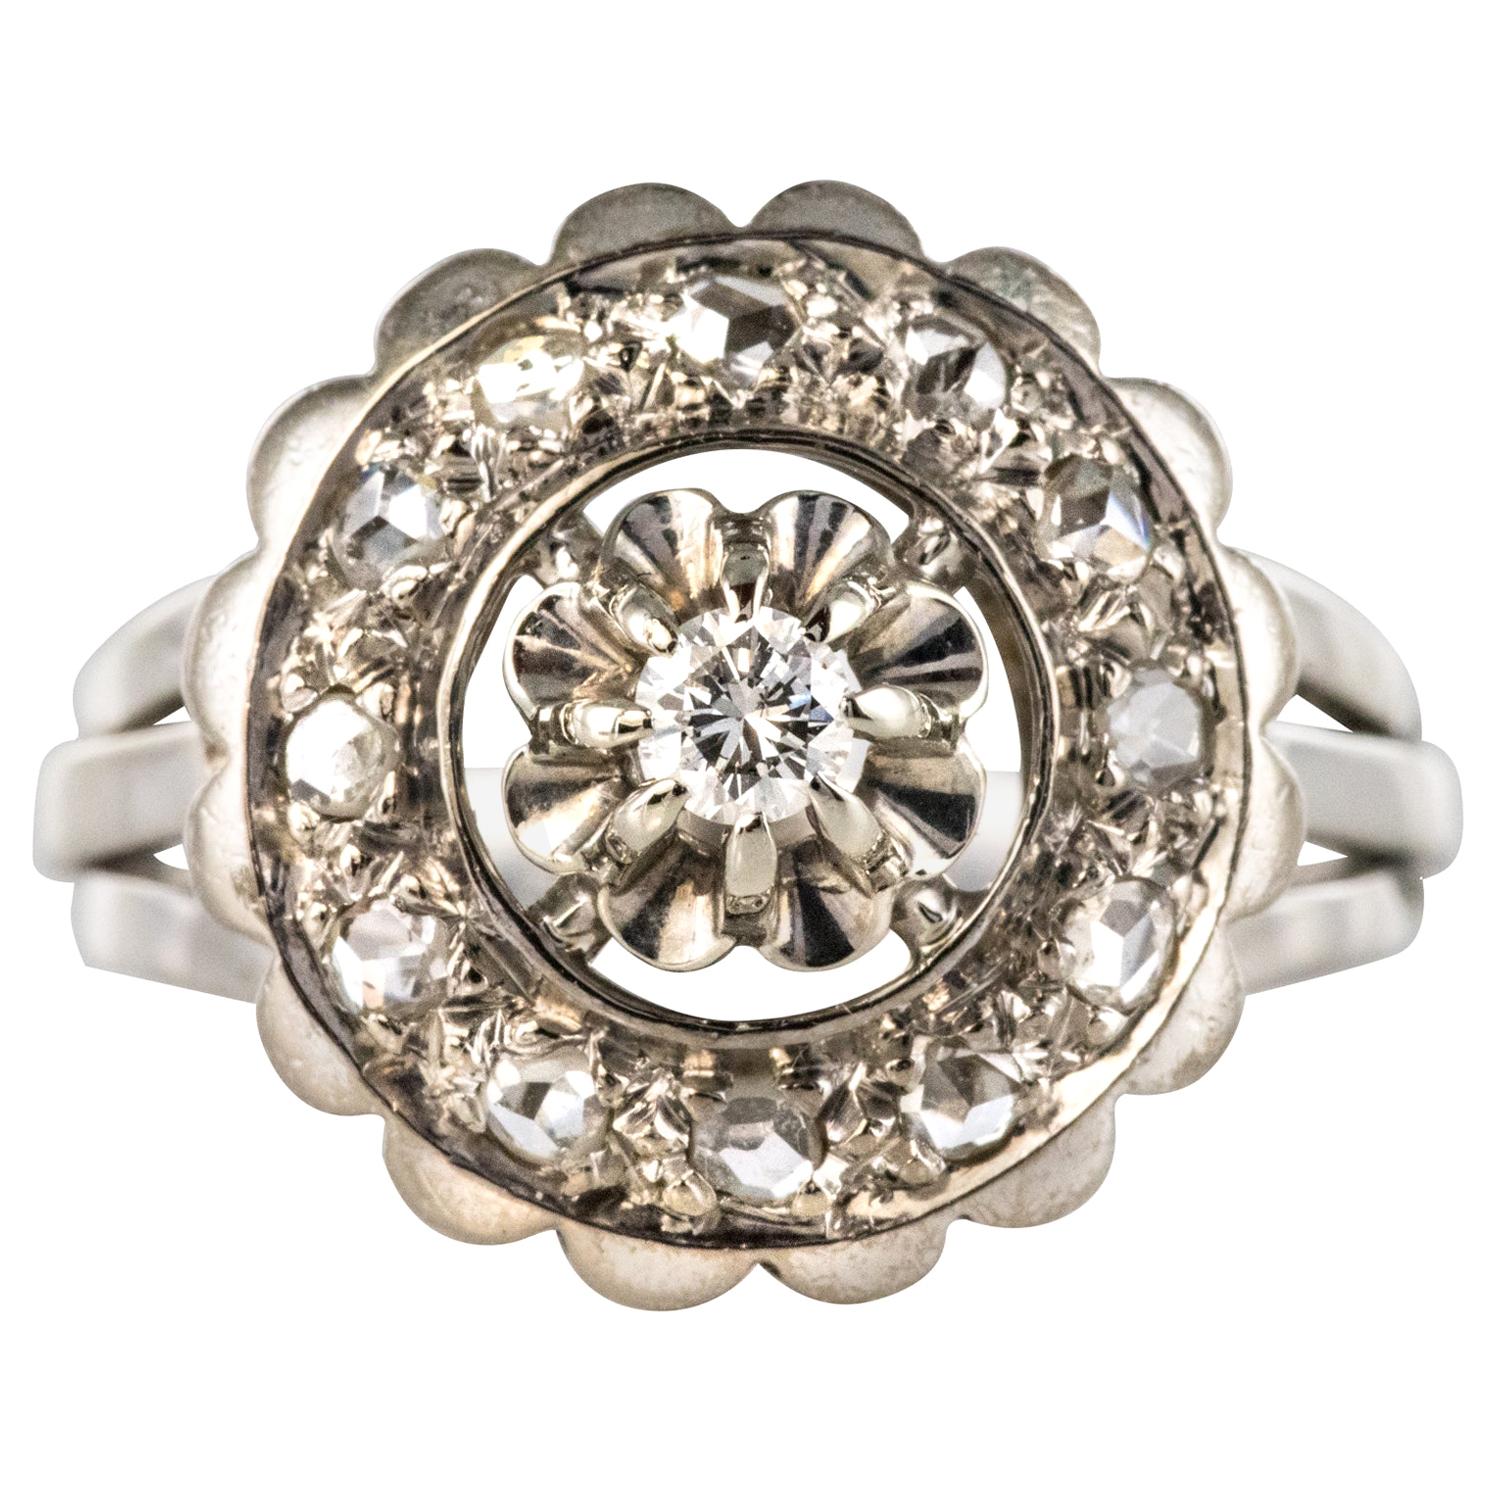 French 1950s Diamonds 18 Karat White Gold Round Ring